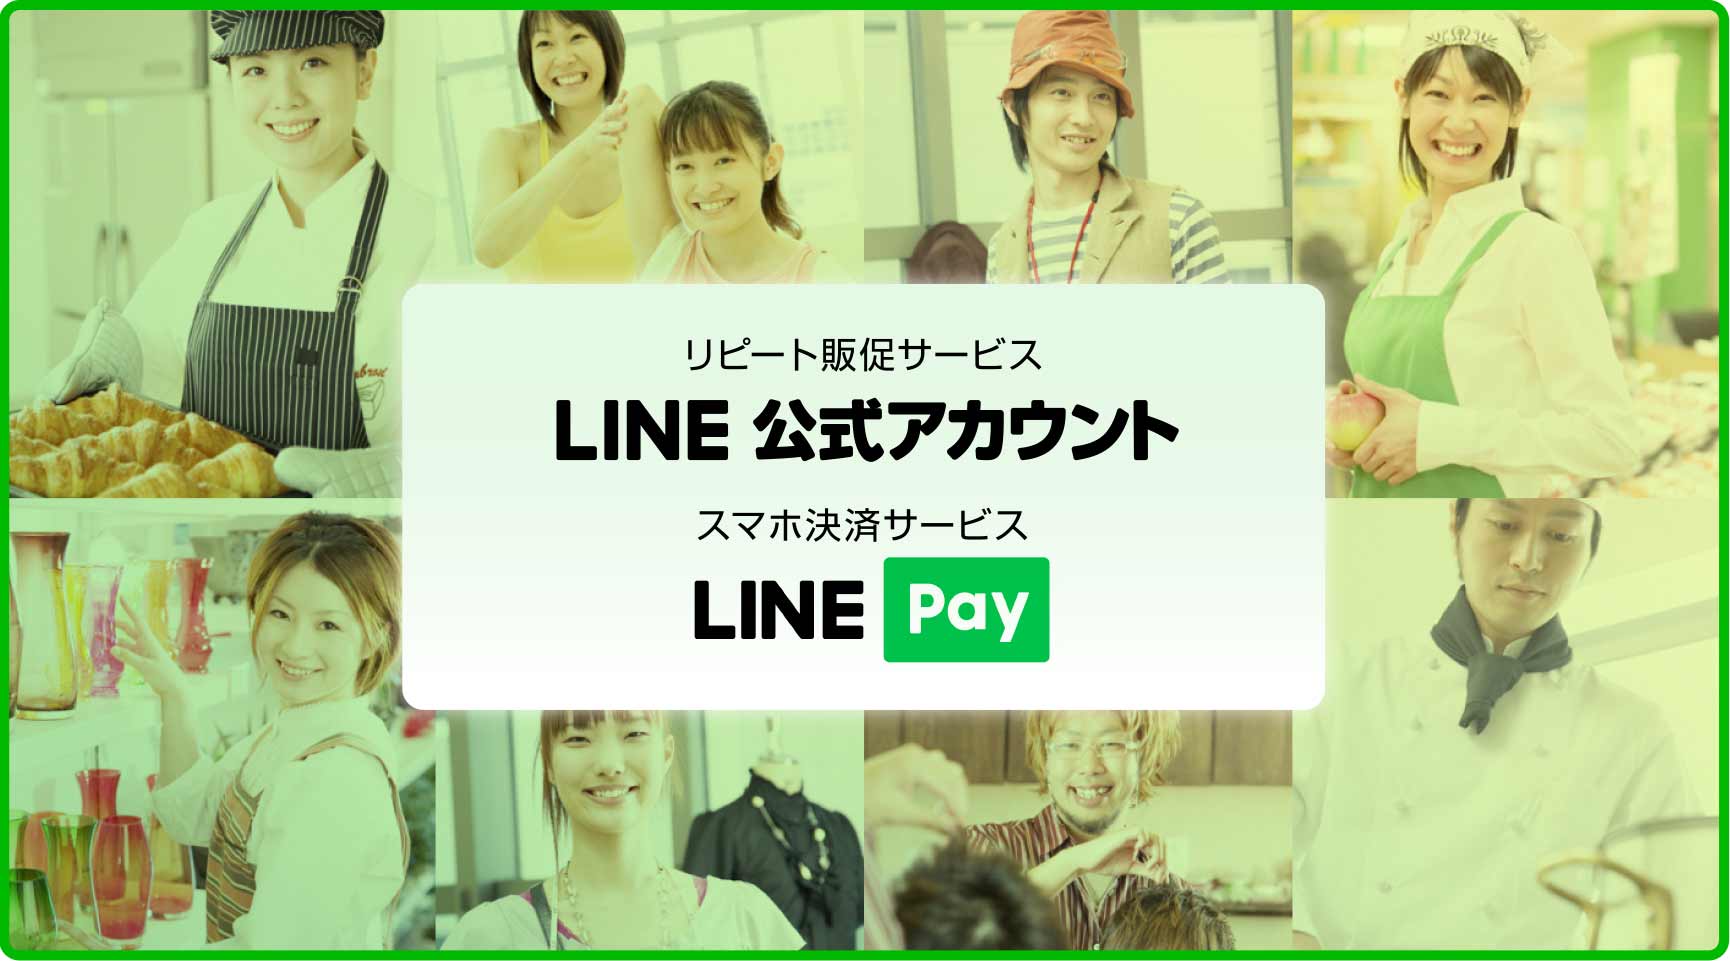 LINE公式アカウント・LINE Pay